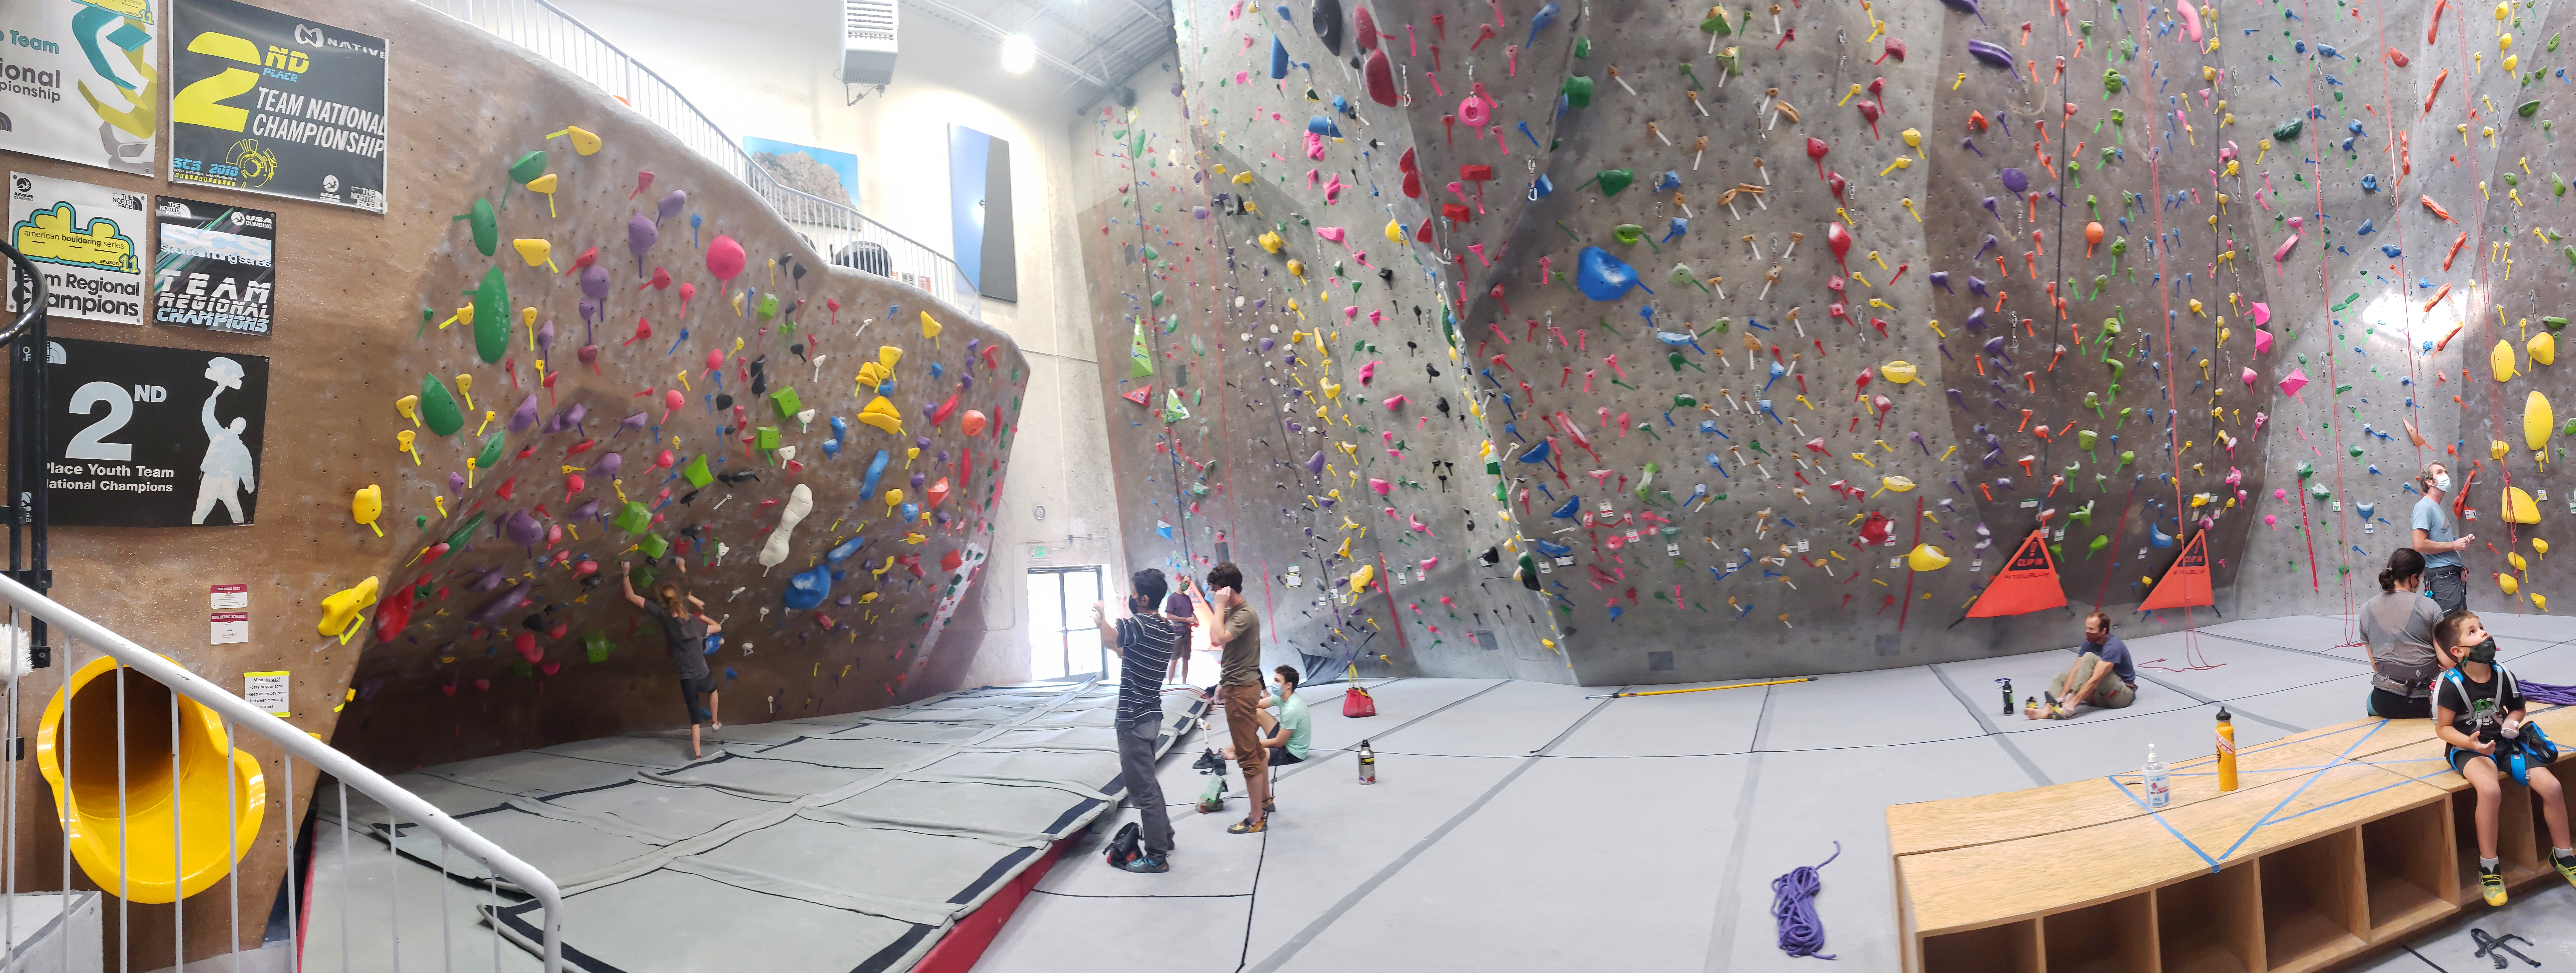 boulder colorado rock climbing gym